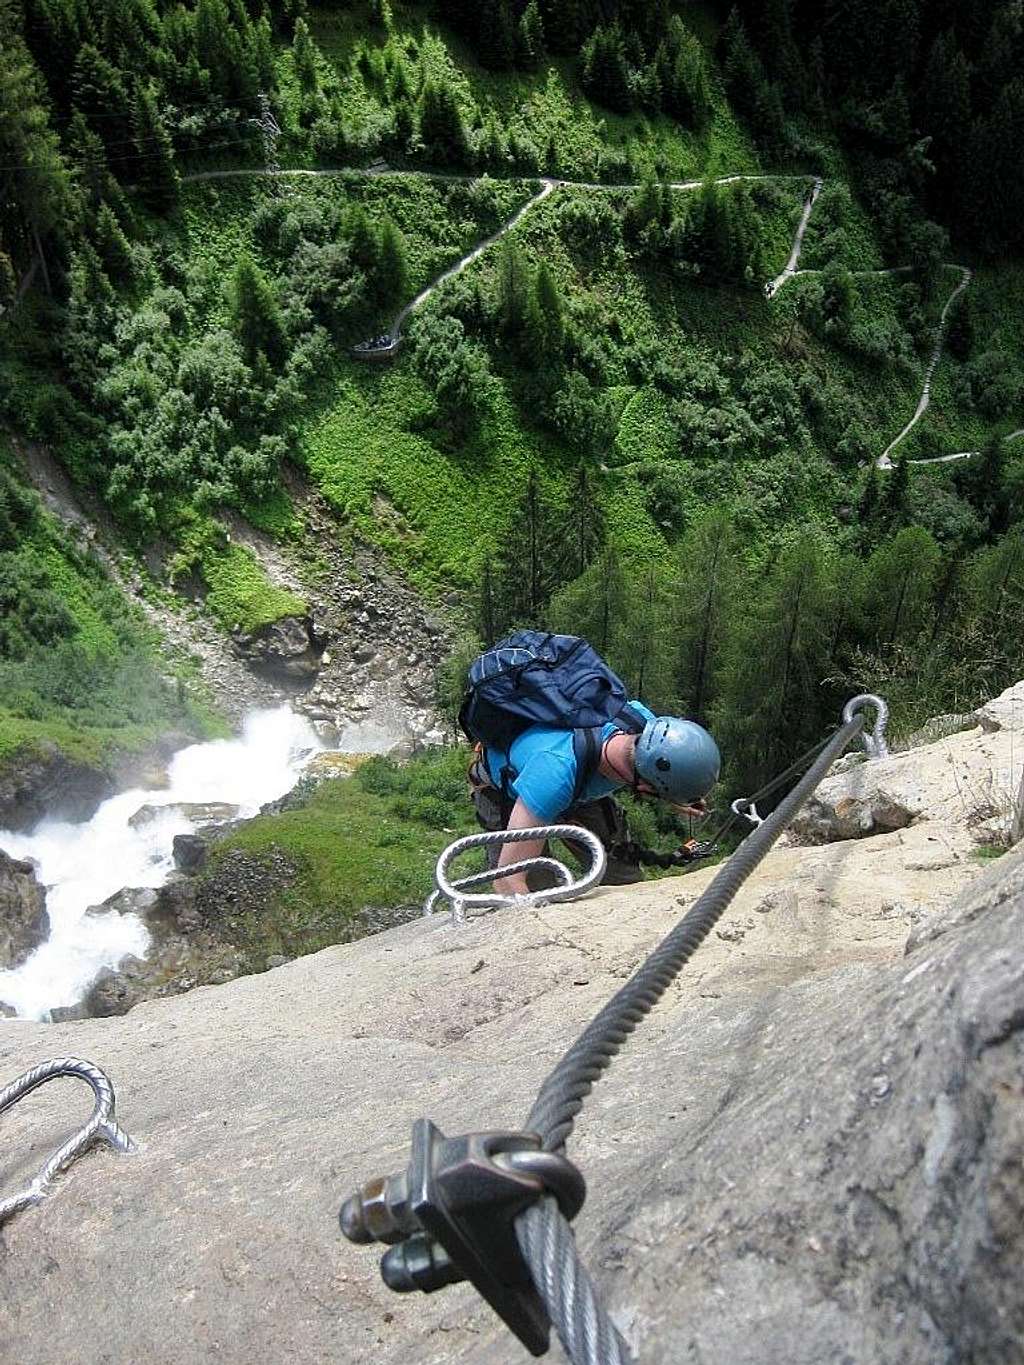 A climber coming up the Stuibenfall Via Ferrata, with the hiking trail deep down below.